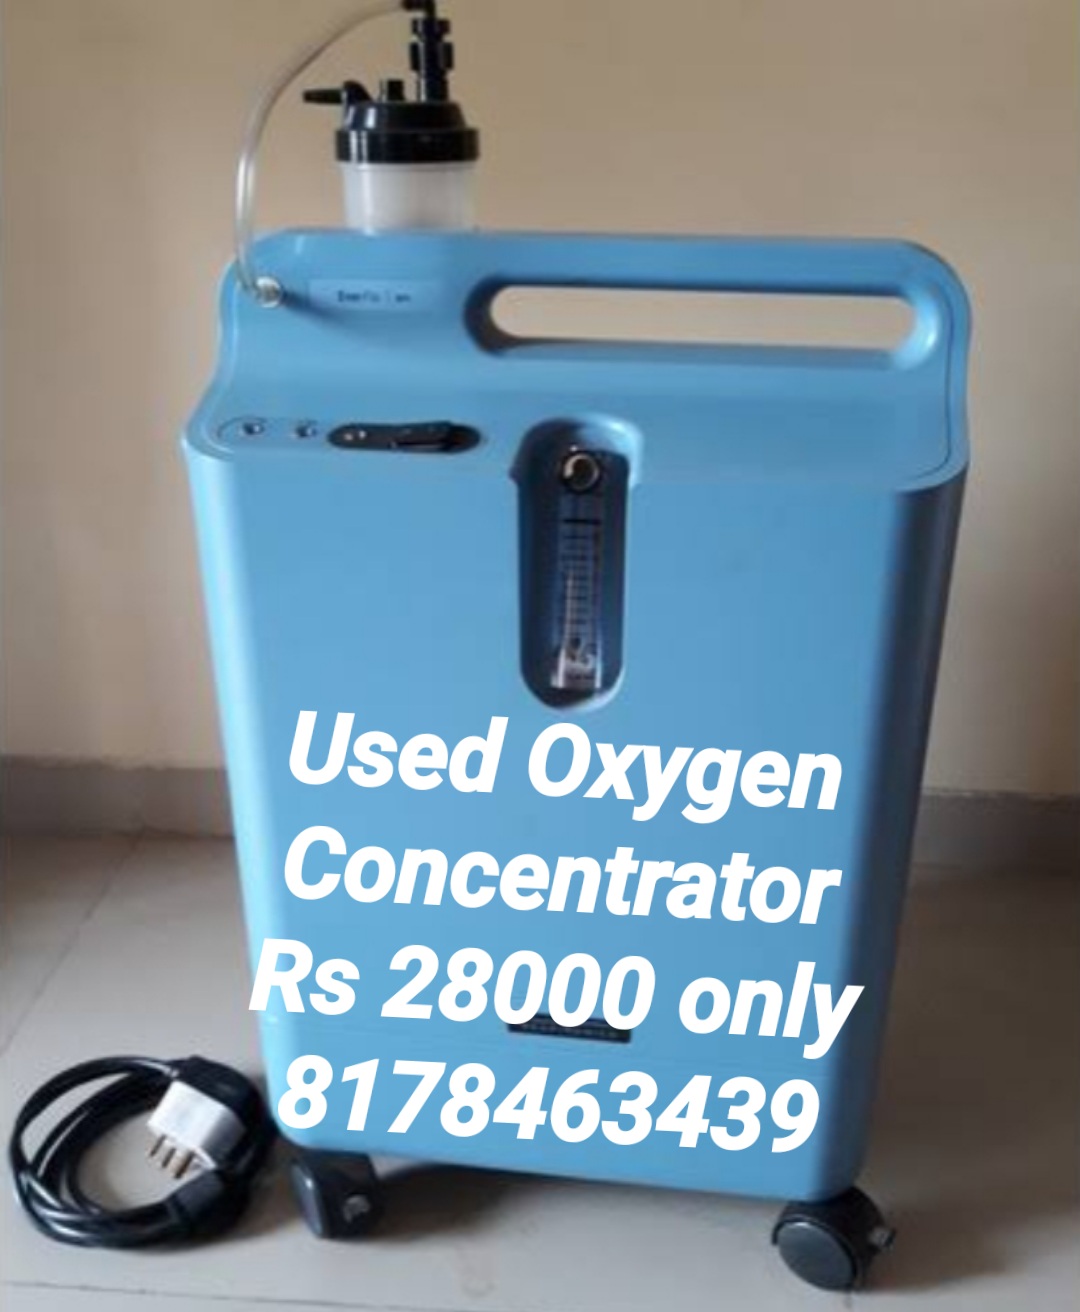 Used Philips Oxygen Machine In Delhi Noida Ghaziabad 8178463439